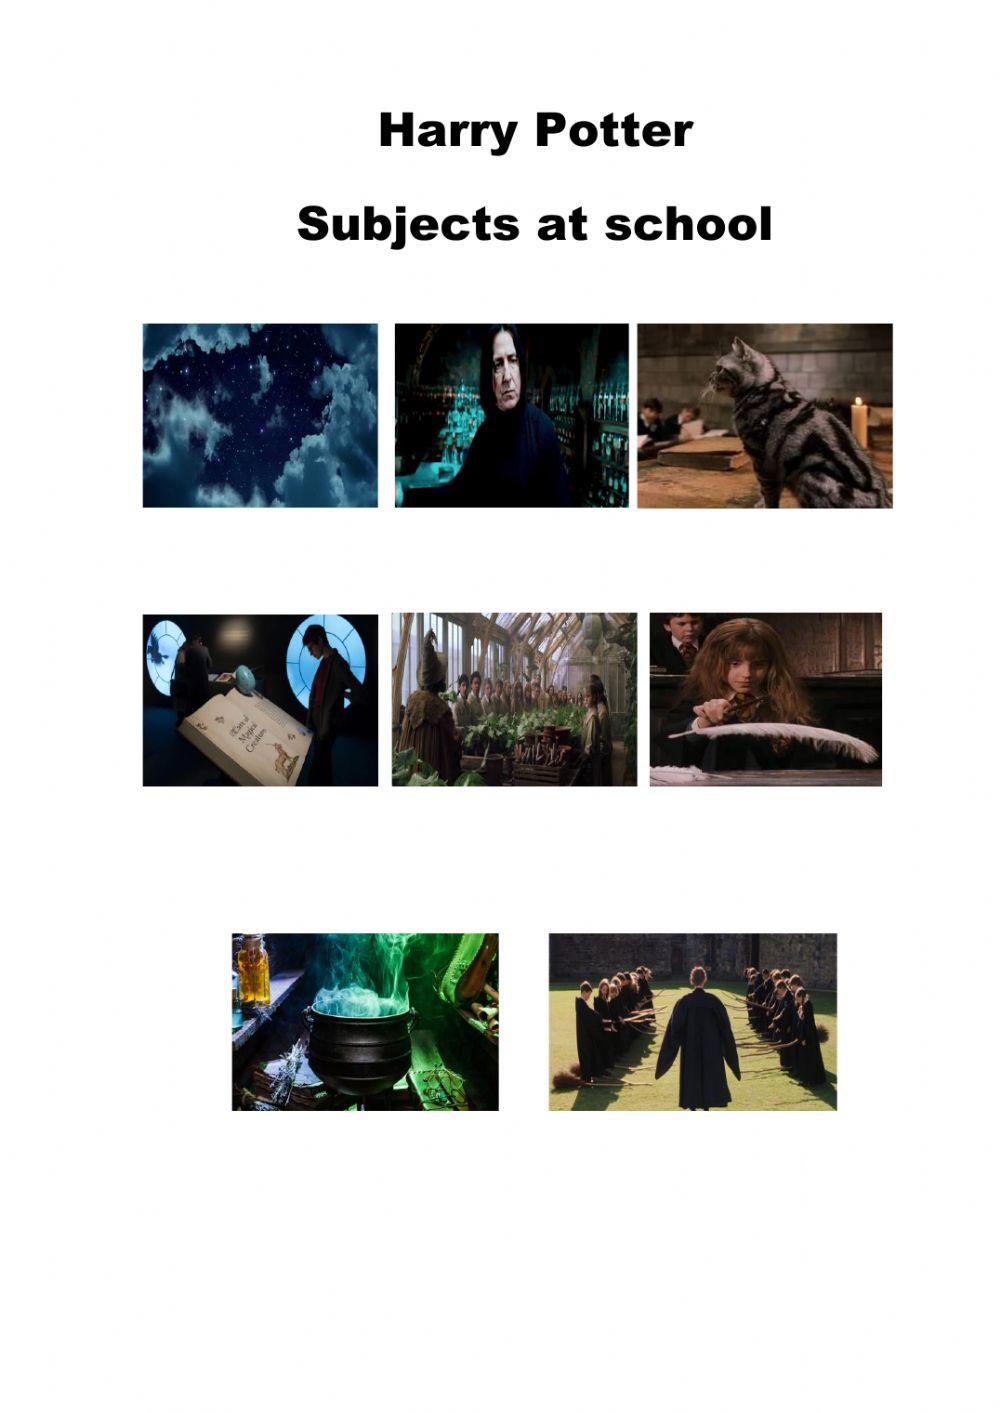 Harry Potter subjects